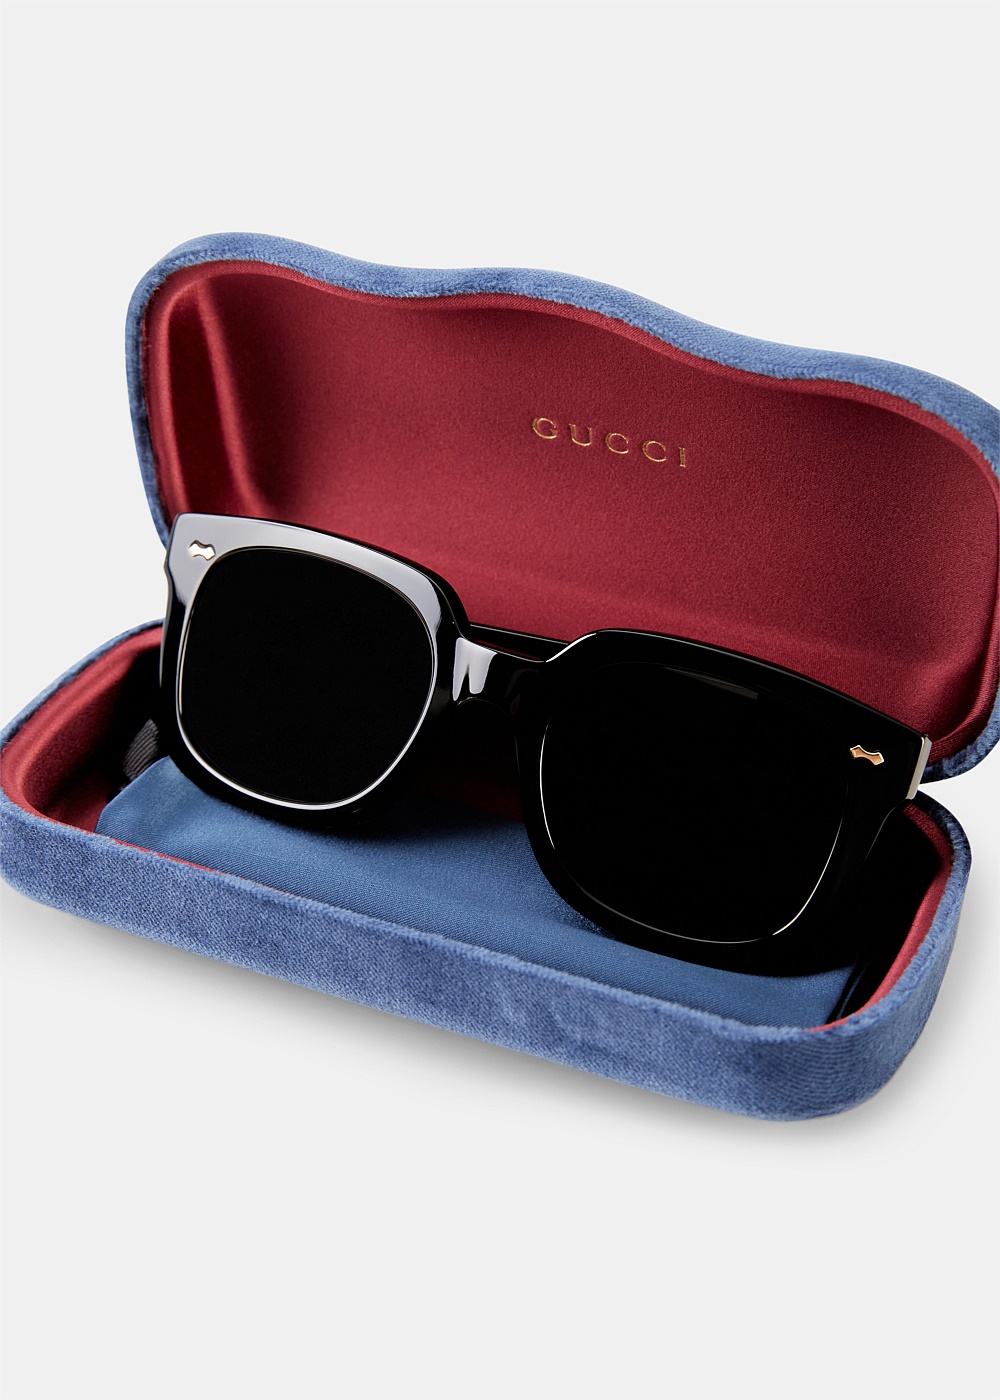 Buy Gucci Sunglasses & Glasses Online - Shipped Worldwide-nextbuild.com.vn